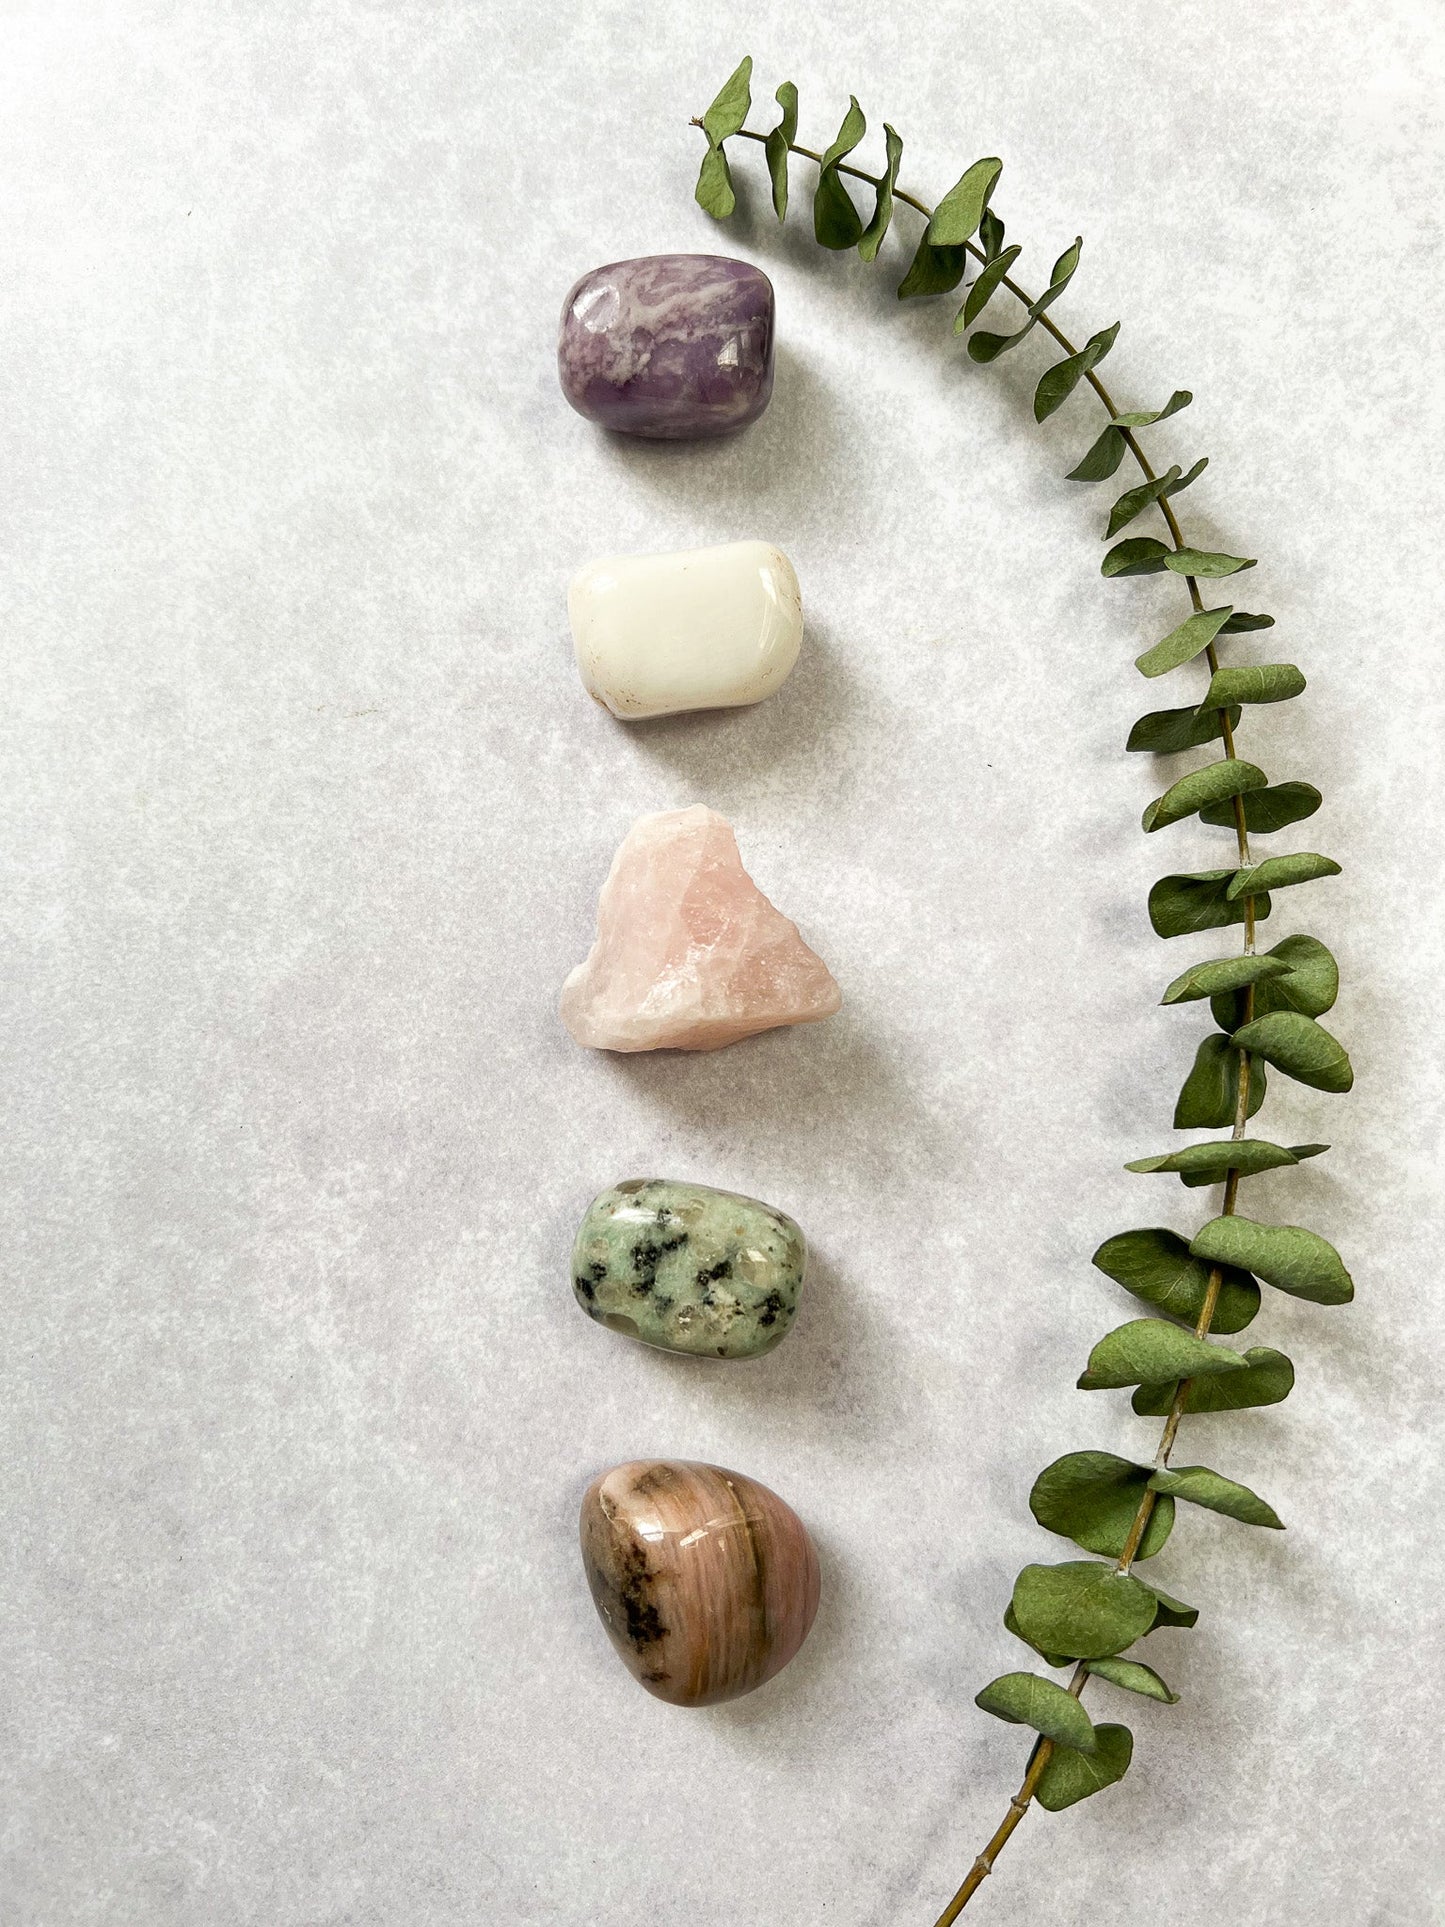 Stones of the Heart - Love Crystals - Stones of Love - Rose Quartz - Kiwi Jasper - Lepidolite - Snow Quartz - Rhodonite - Delicata House Crystals Set